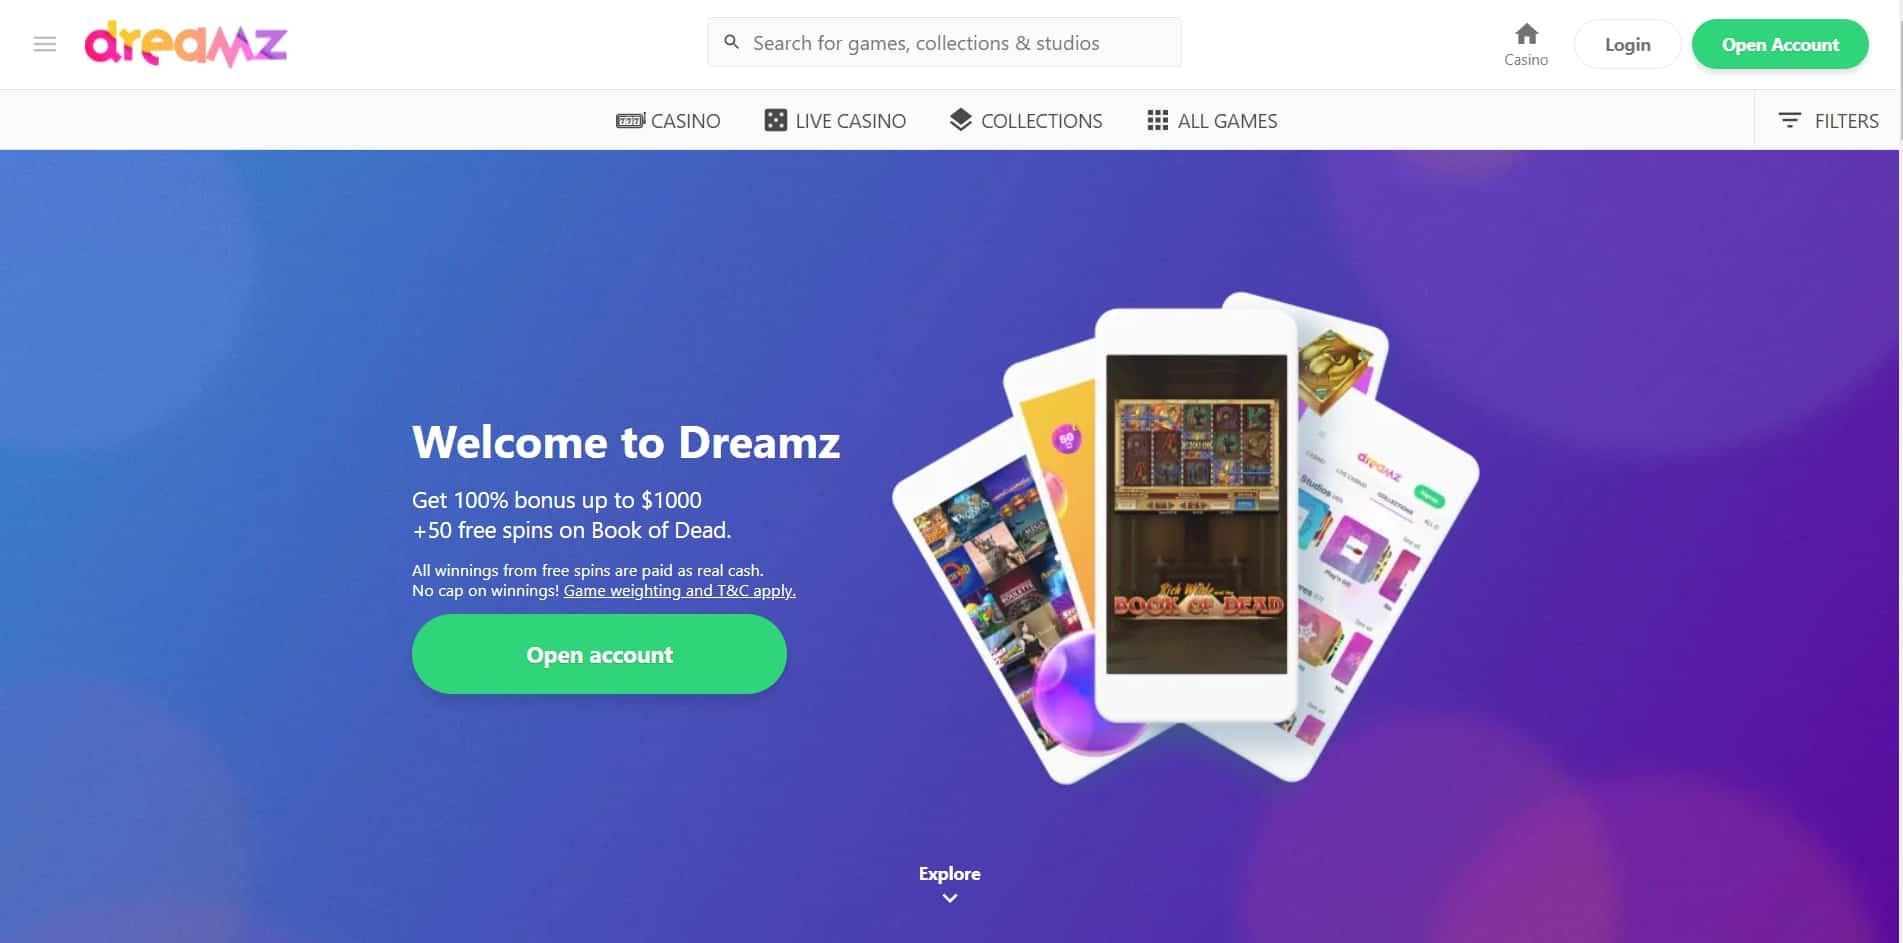 Dreamz casino homepage